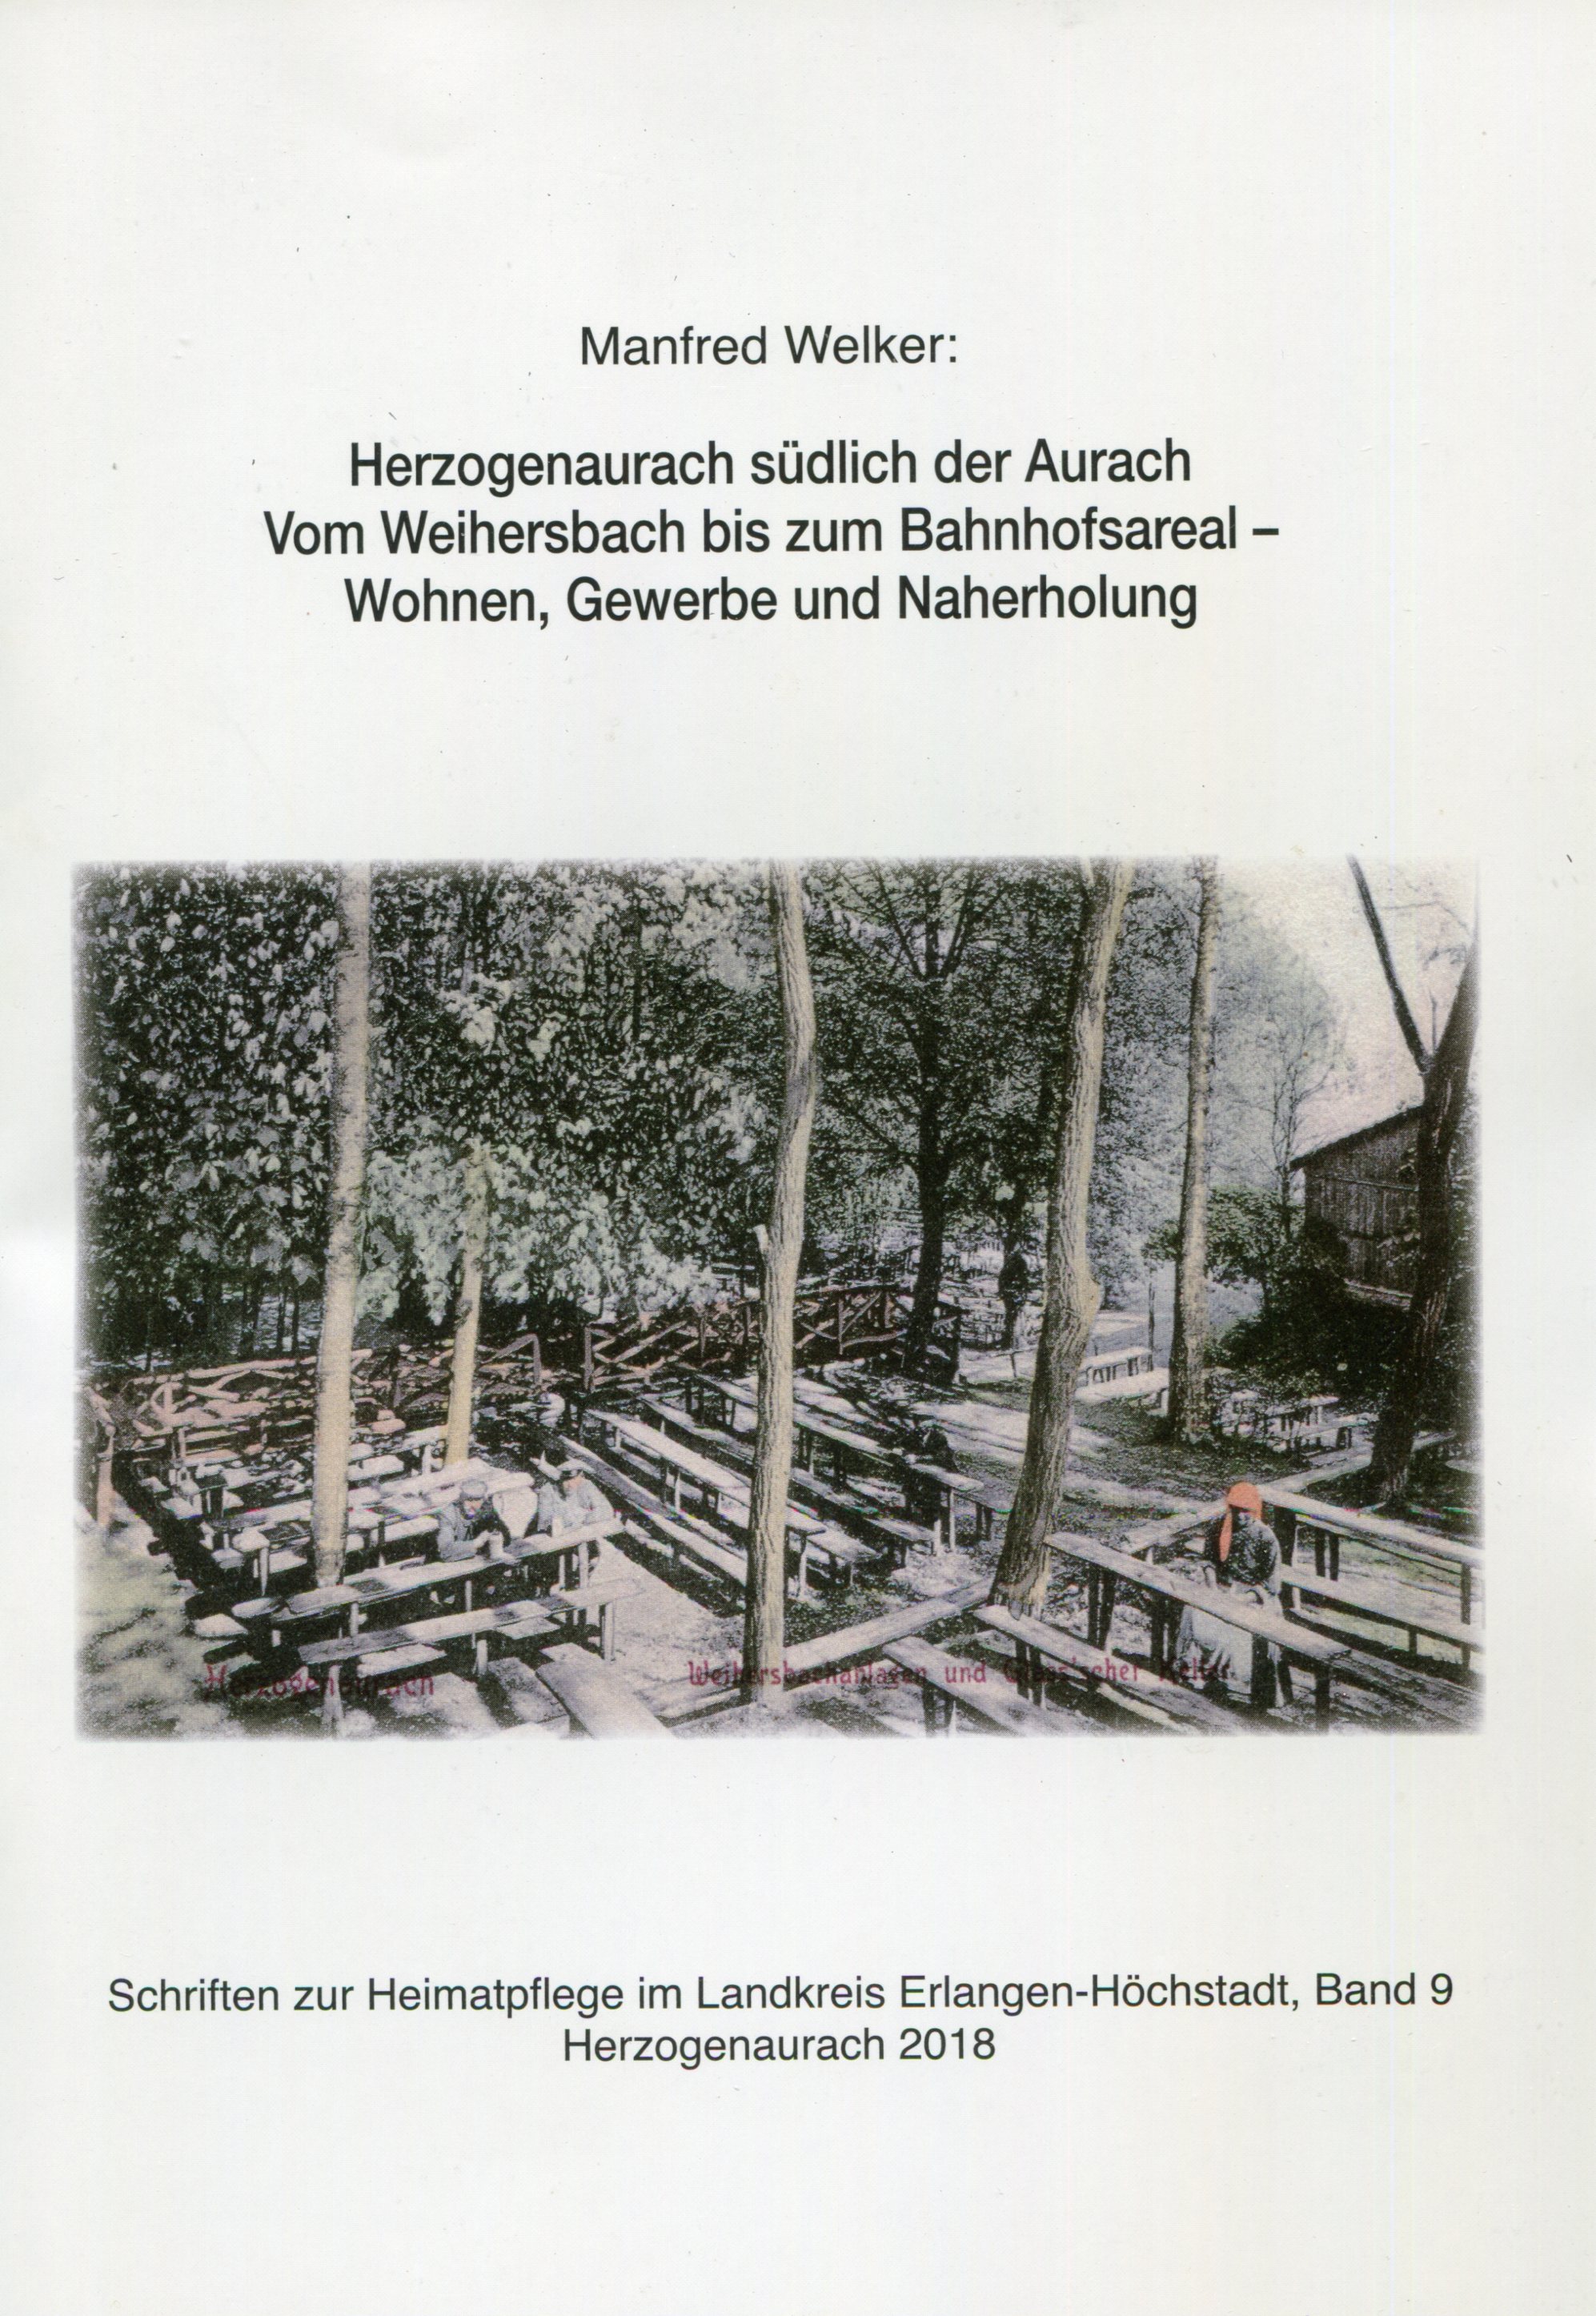 Heimatpflege ERH Band 9: Weihersbach - 6,Euro